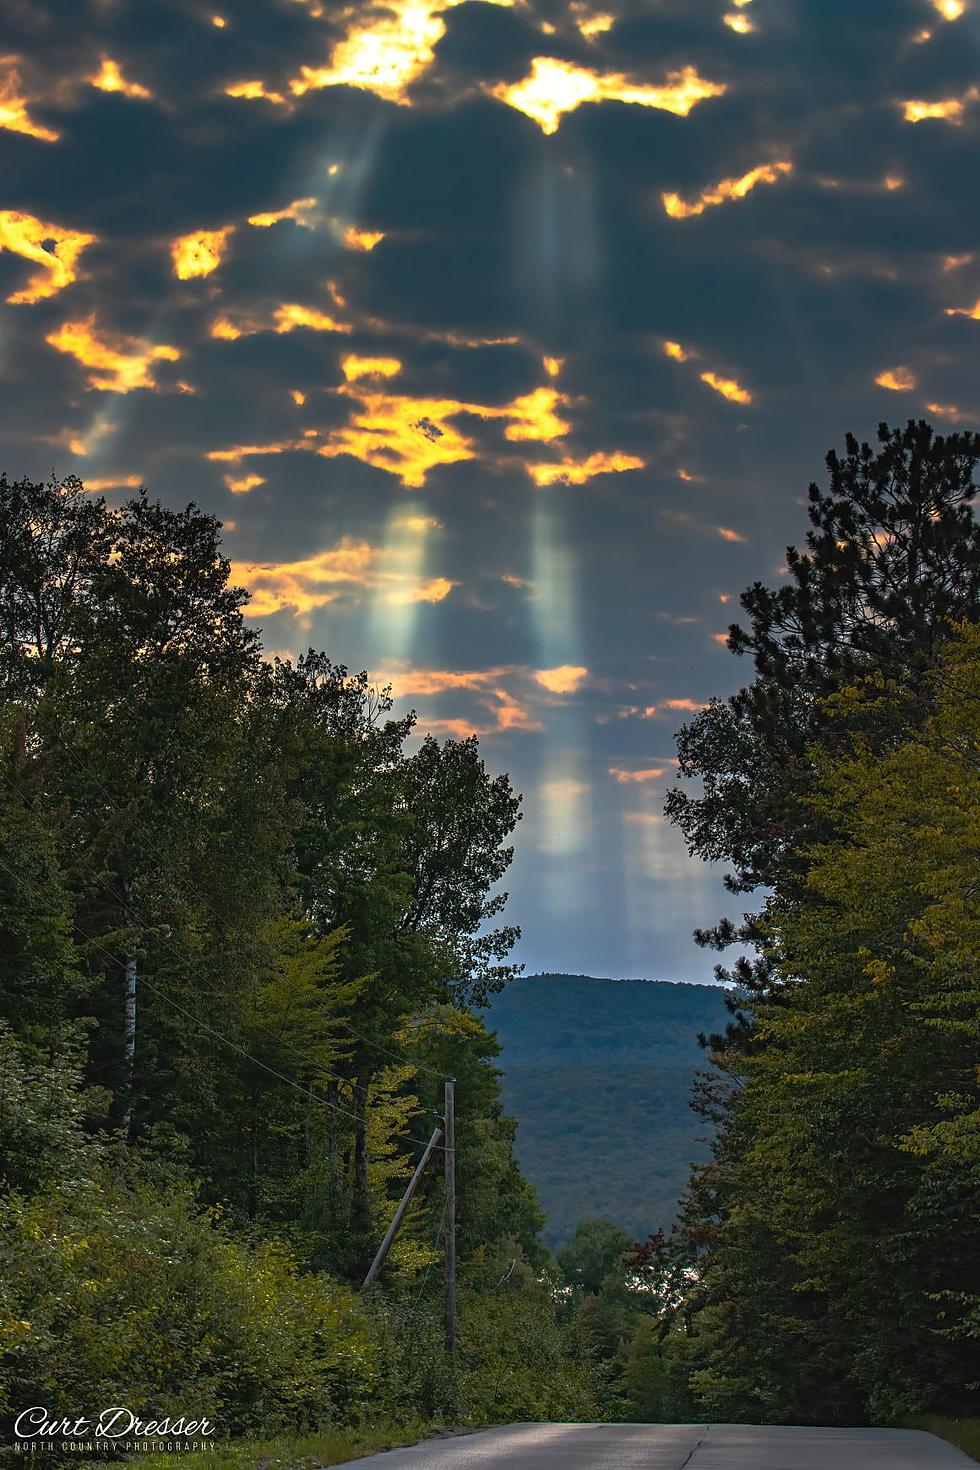 25 Stunning Photos Capture the Wonder of Upstate NY’s Adirondacks